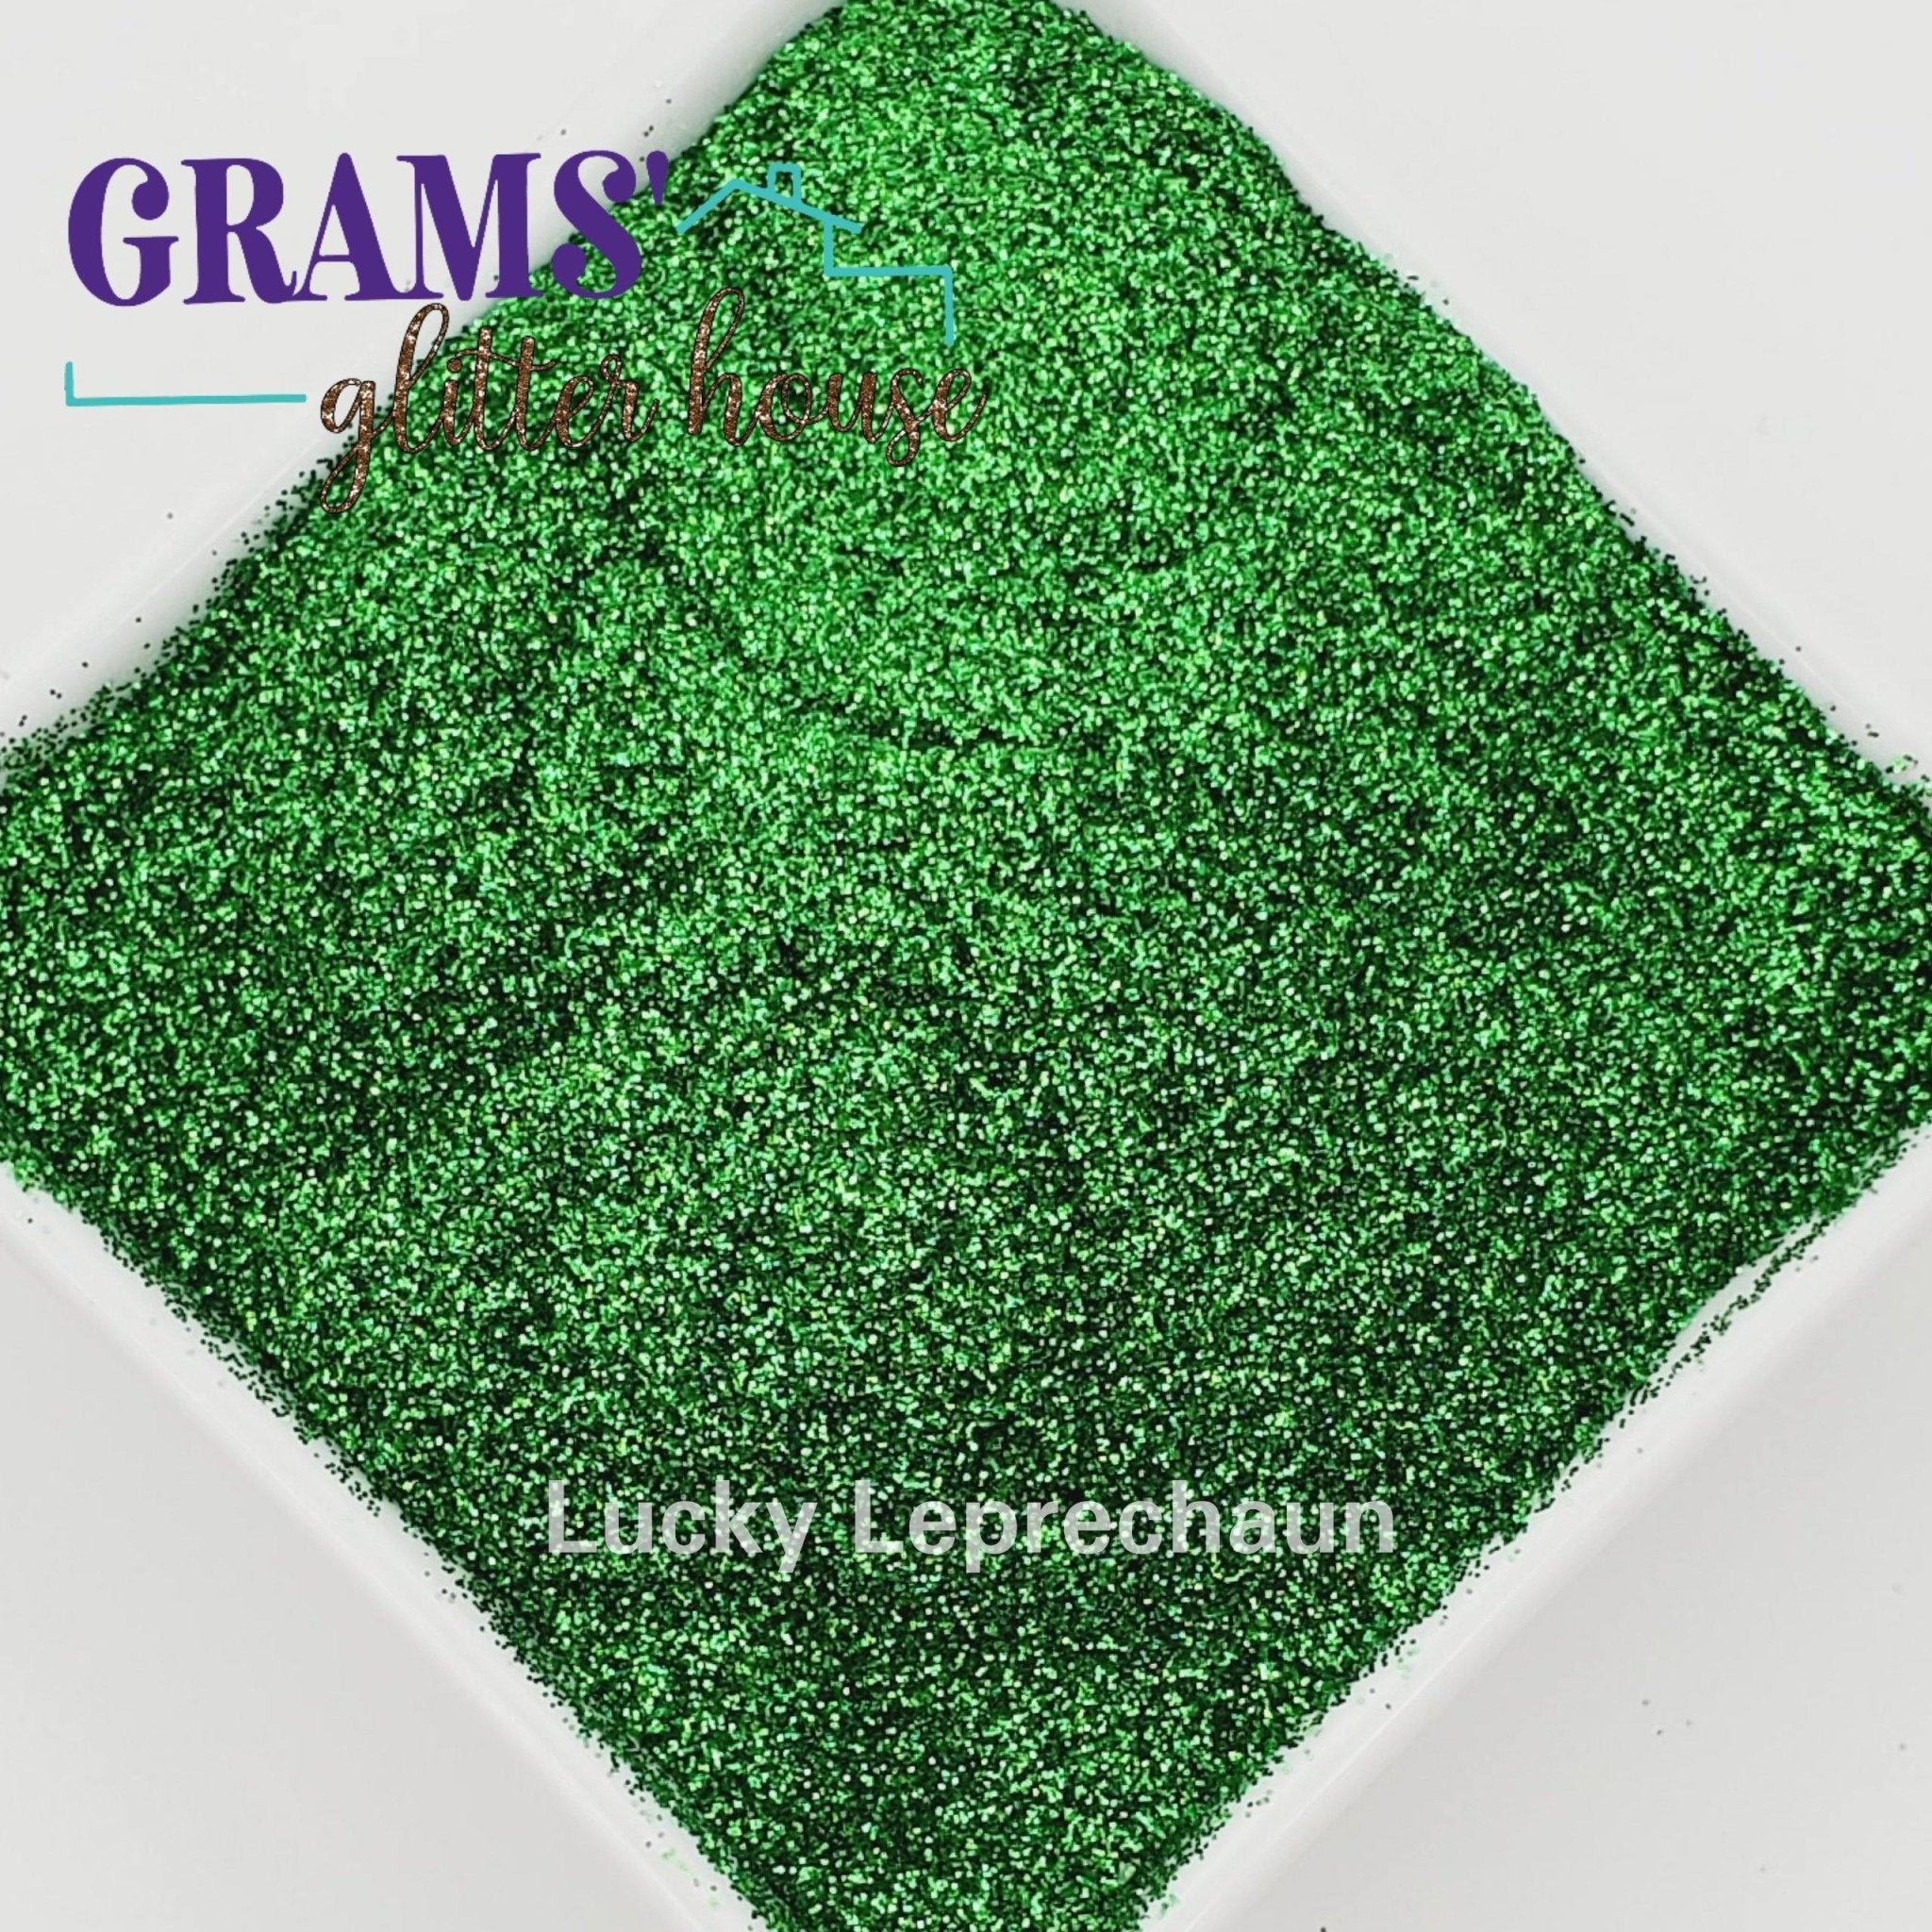 Grams' Glitter House Lucky Leprechaun Polyester Glitter